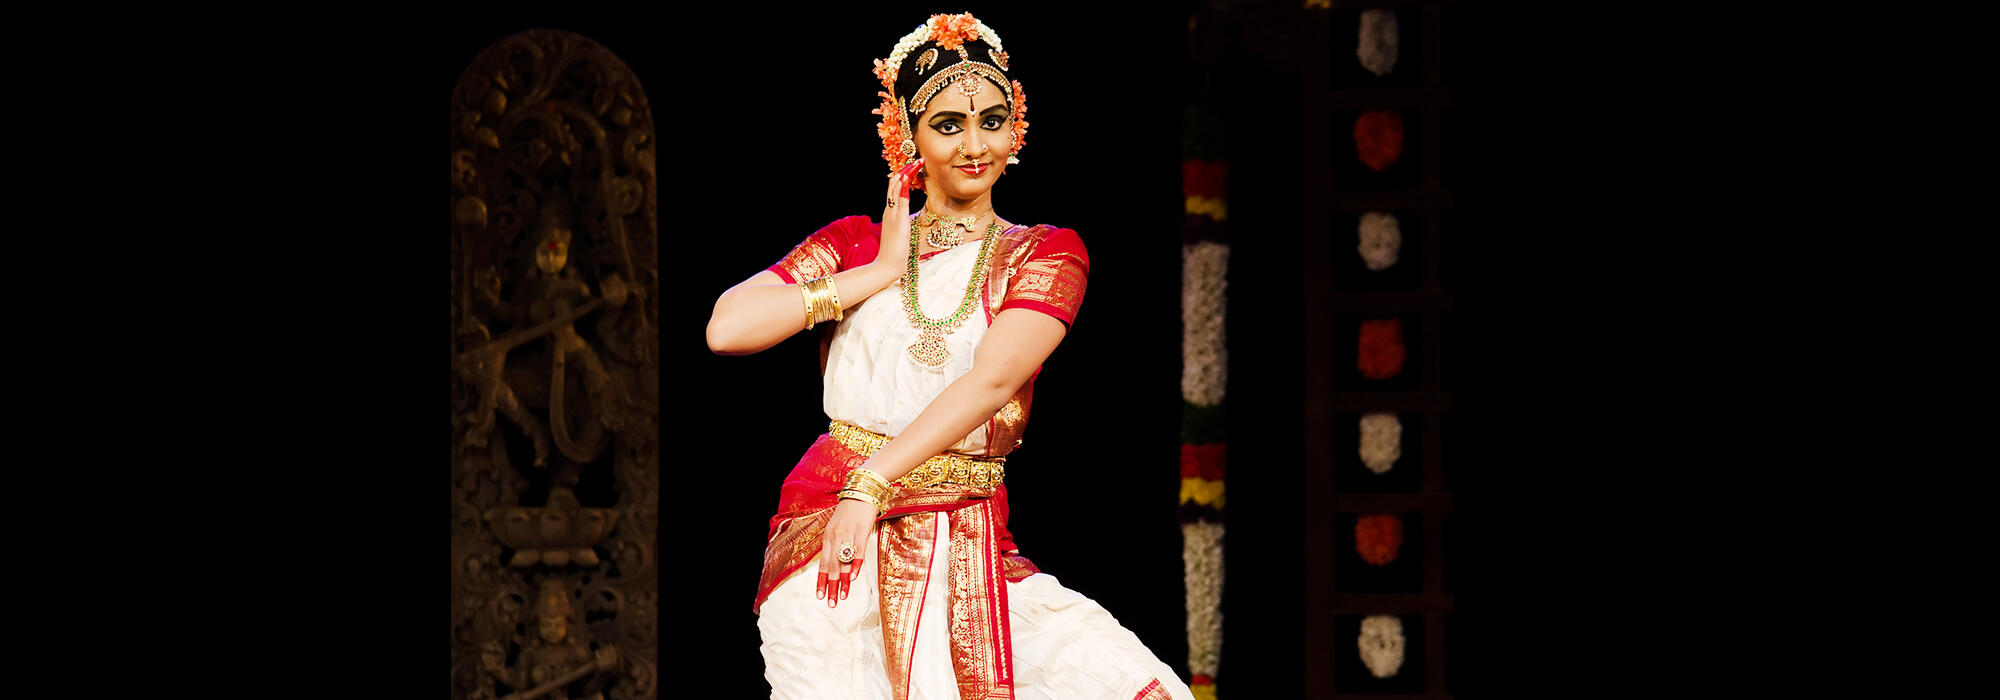 कुचीपुड़ी, भारत की एक शास्त्रीय नृत्य शैली